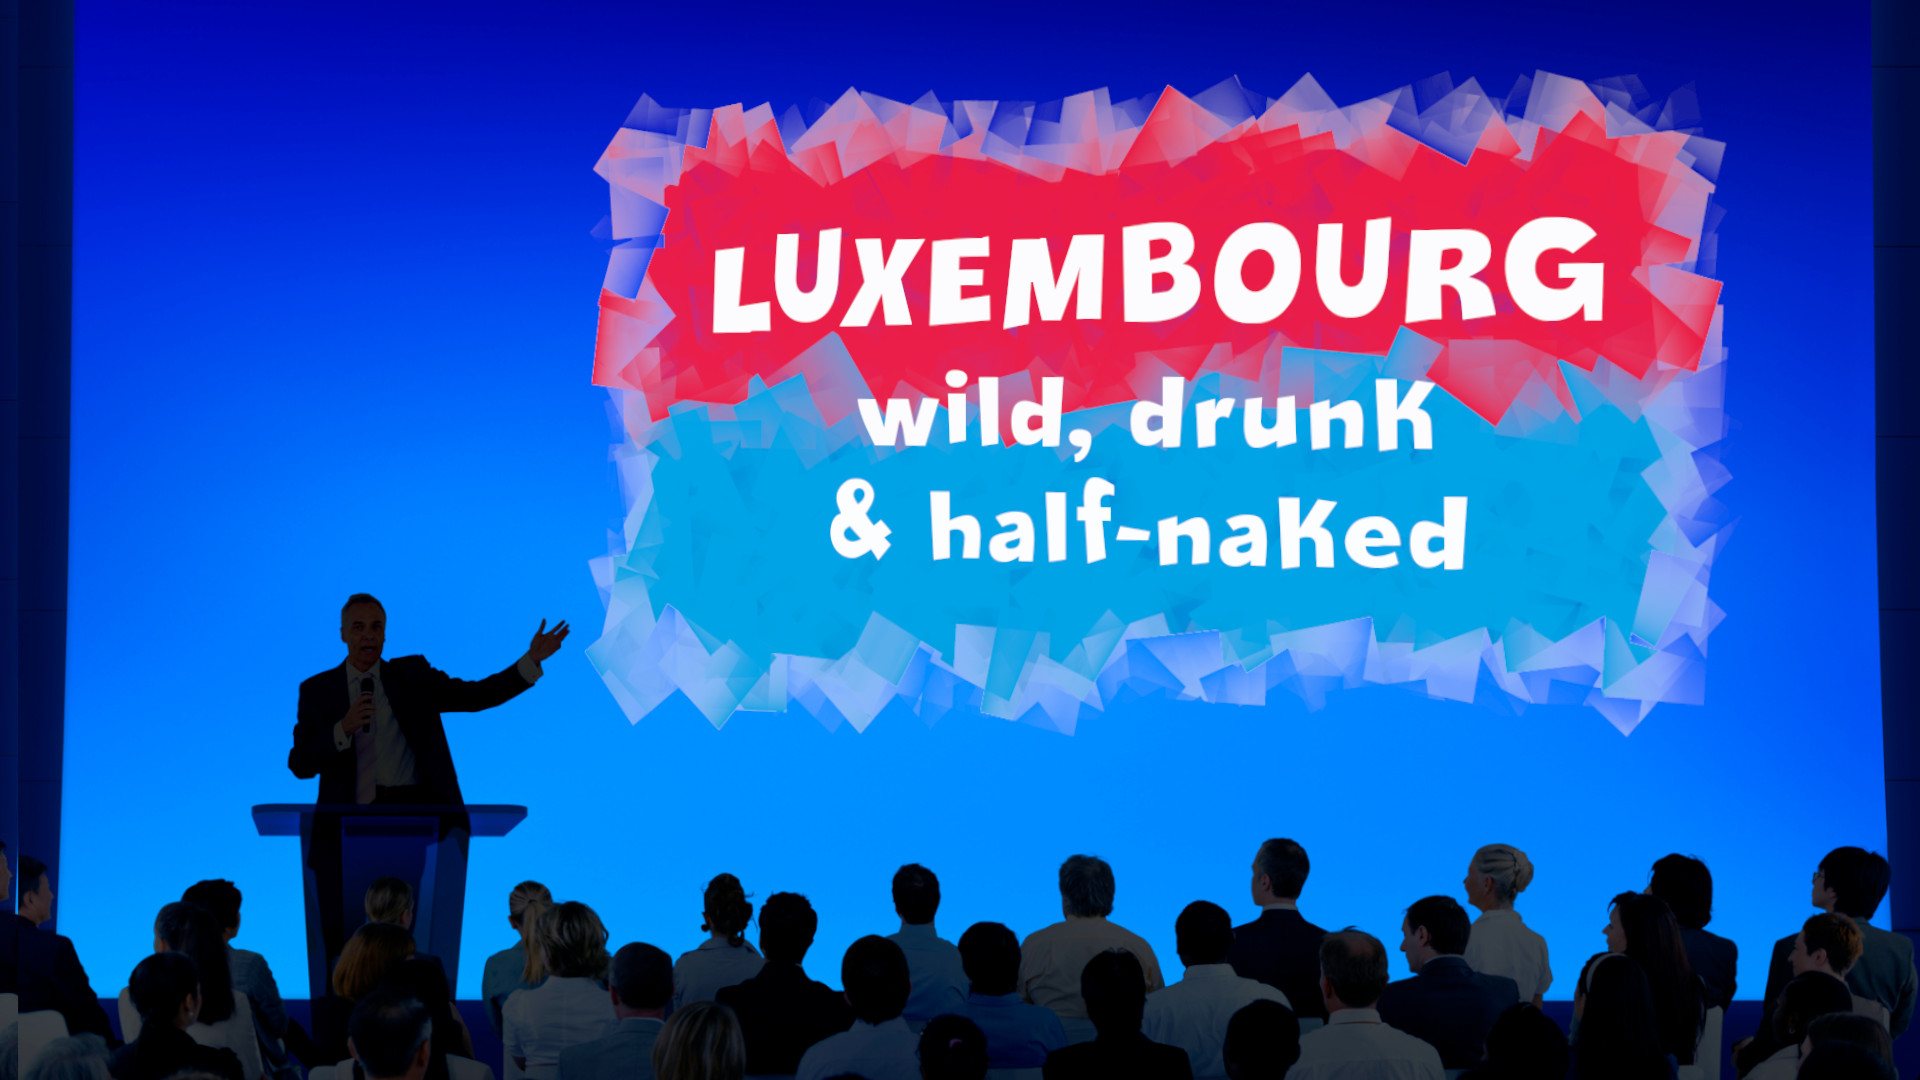 Luxembourg's new slogan